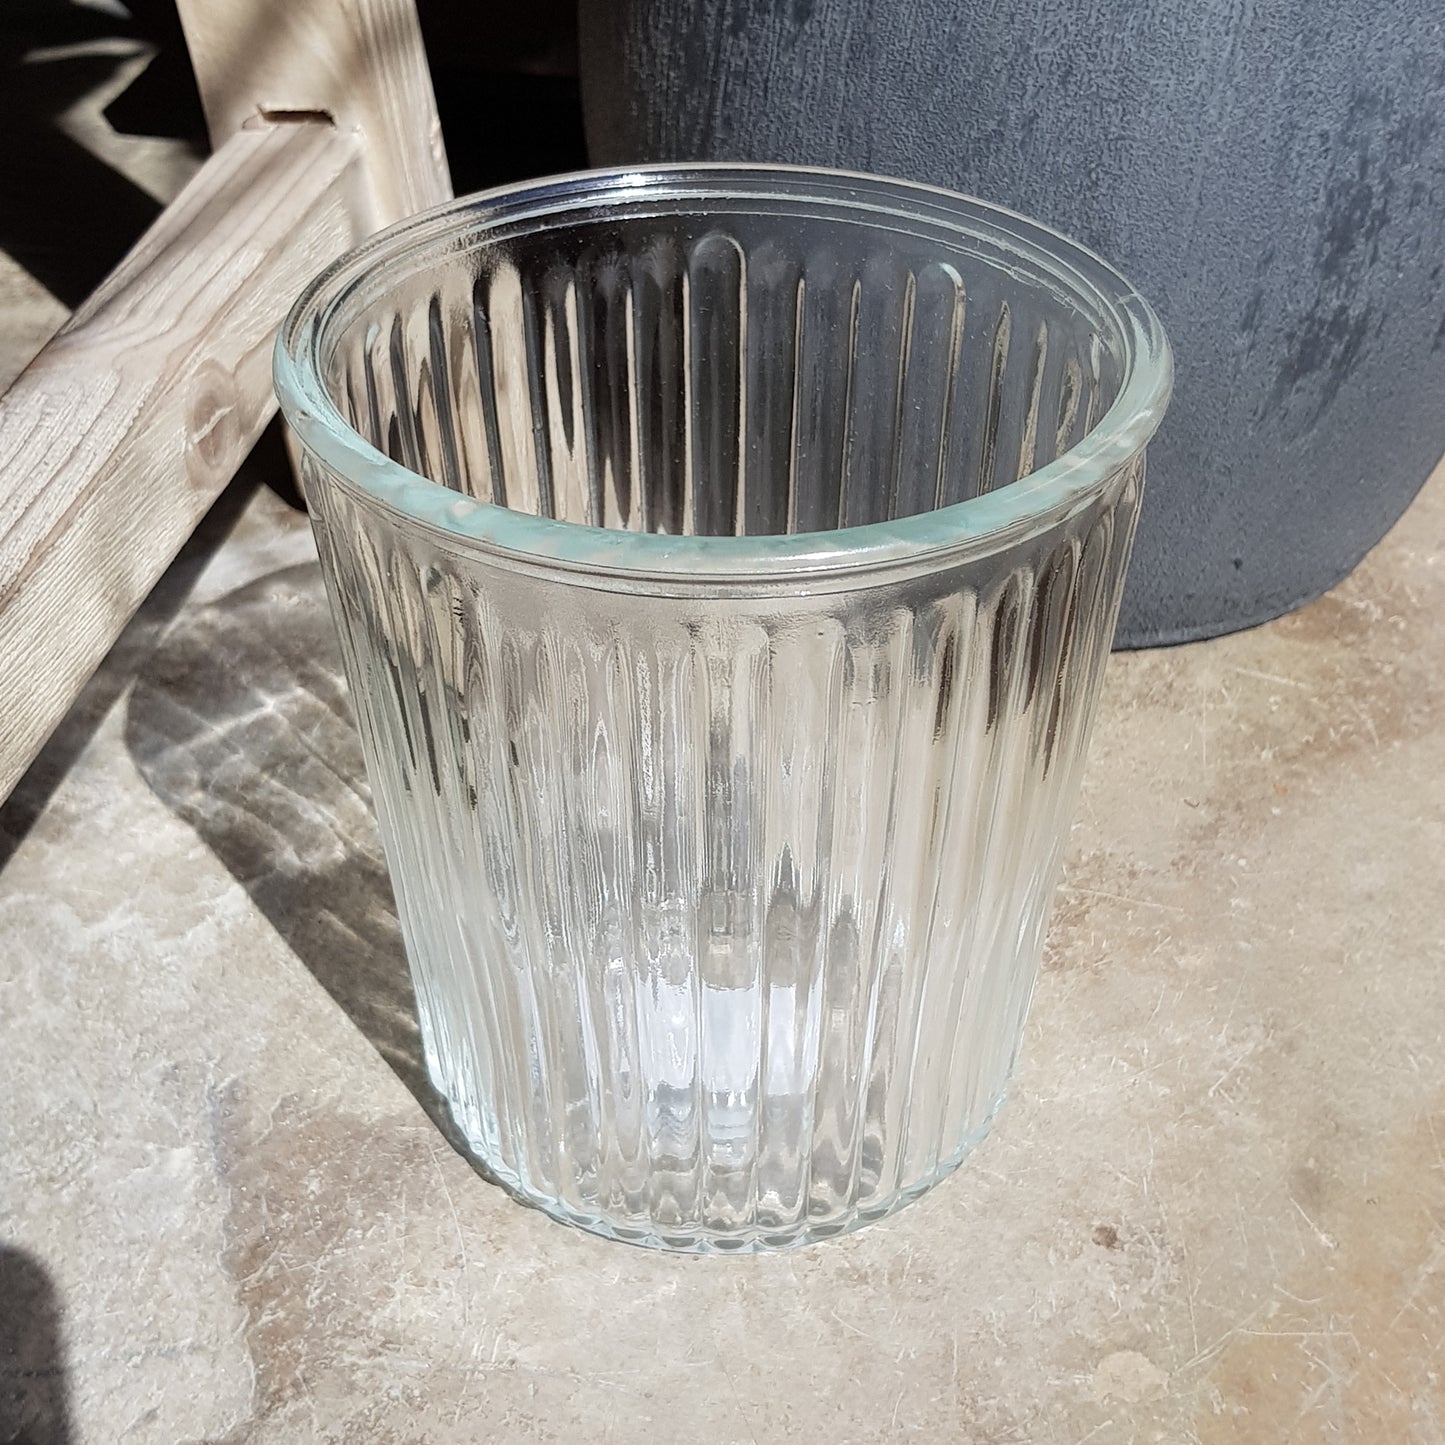 Large vintage style glass pot